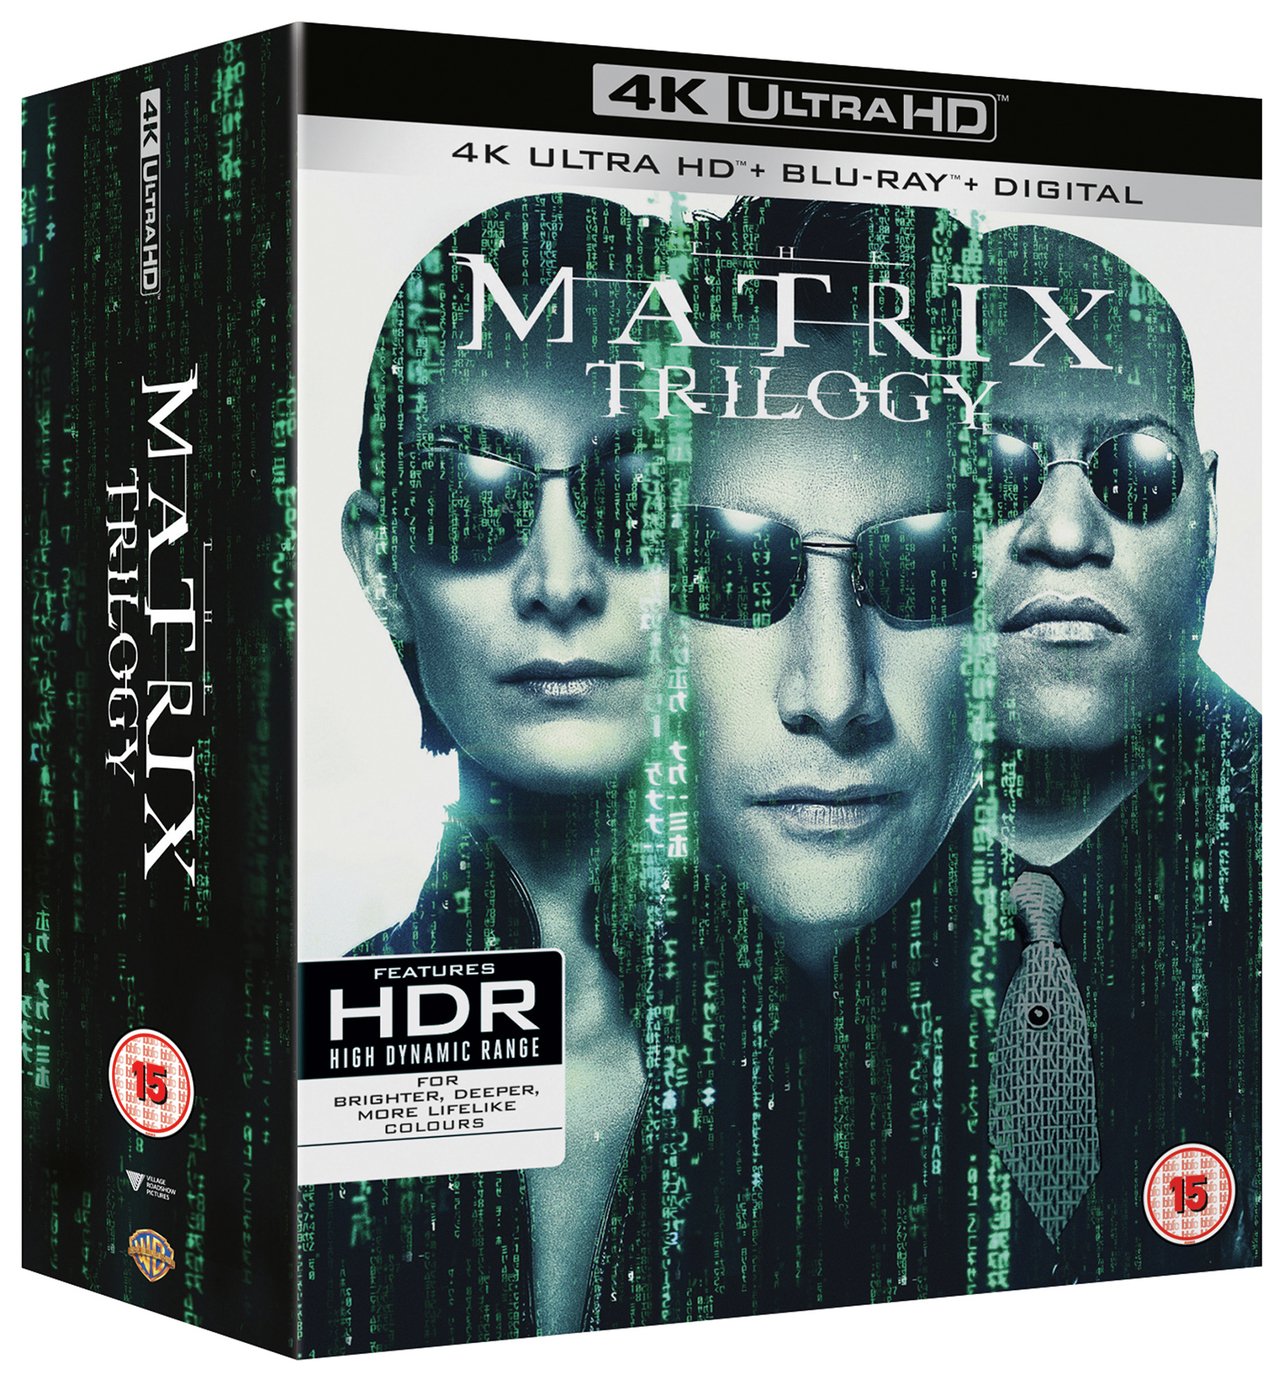 The Matrix Trilogy 4K UHD Blu-Ray Box Set